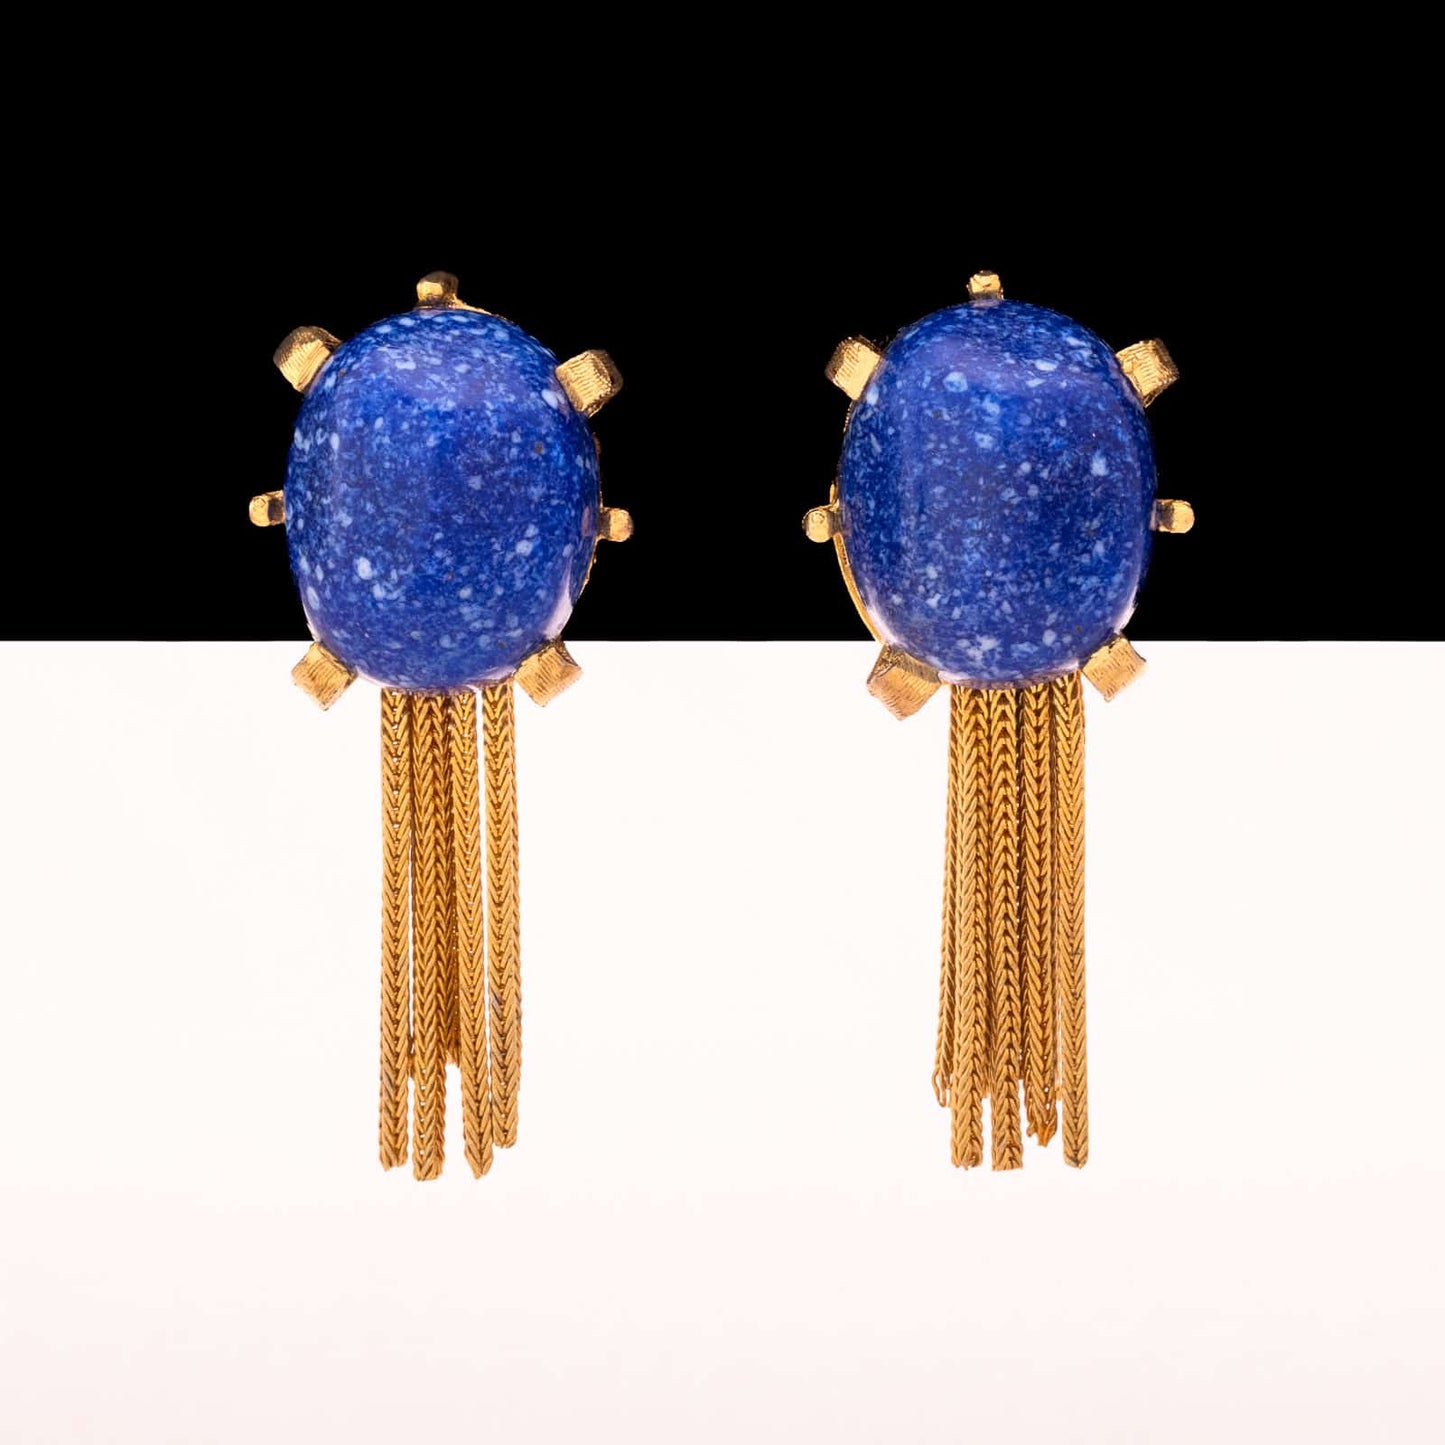 KRAMER ear clips with blue gemstone and chain tassel